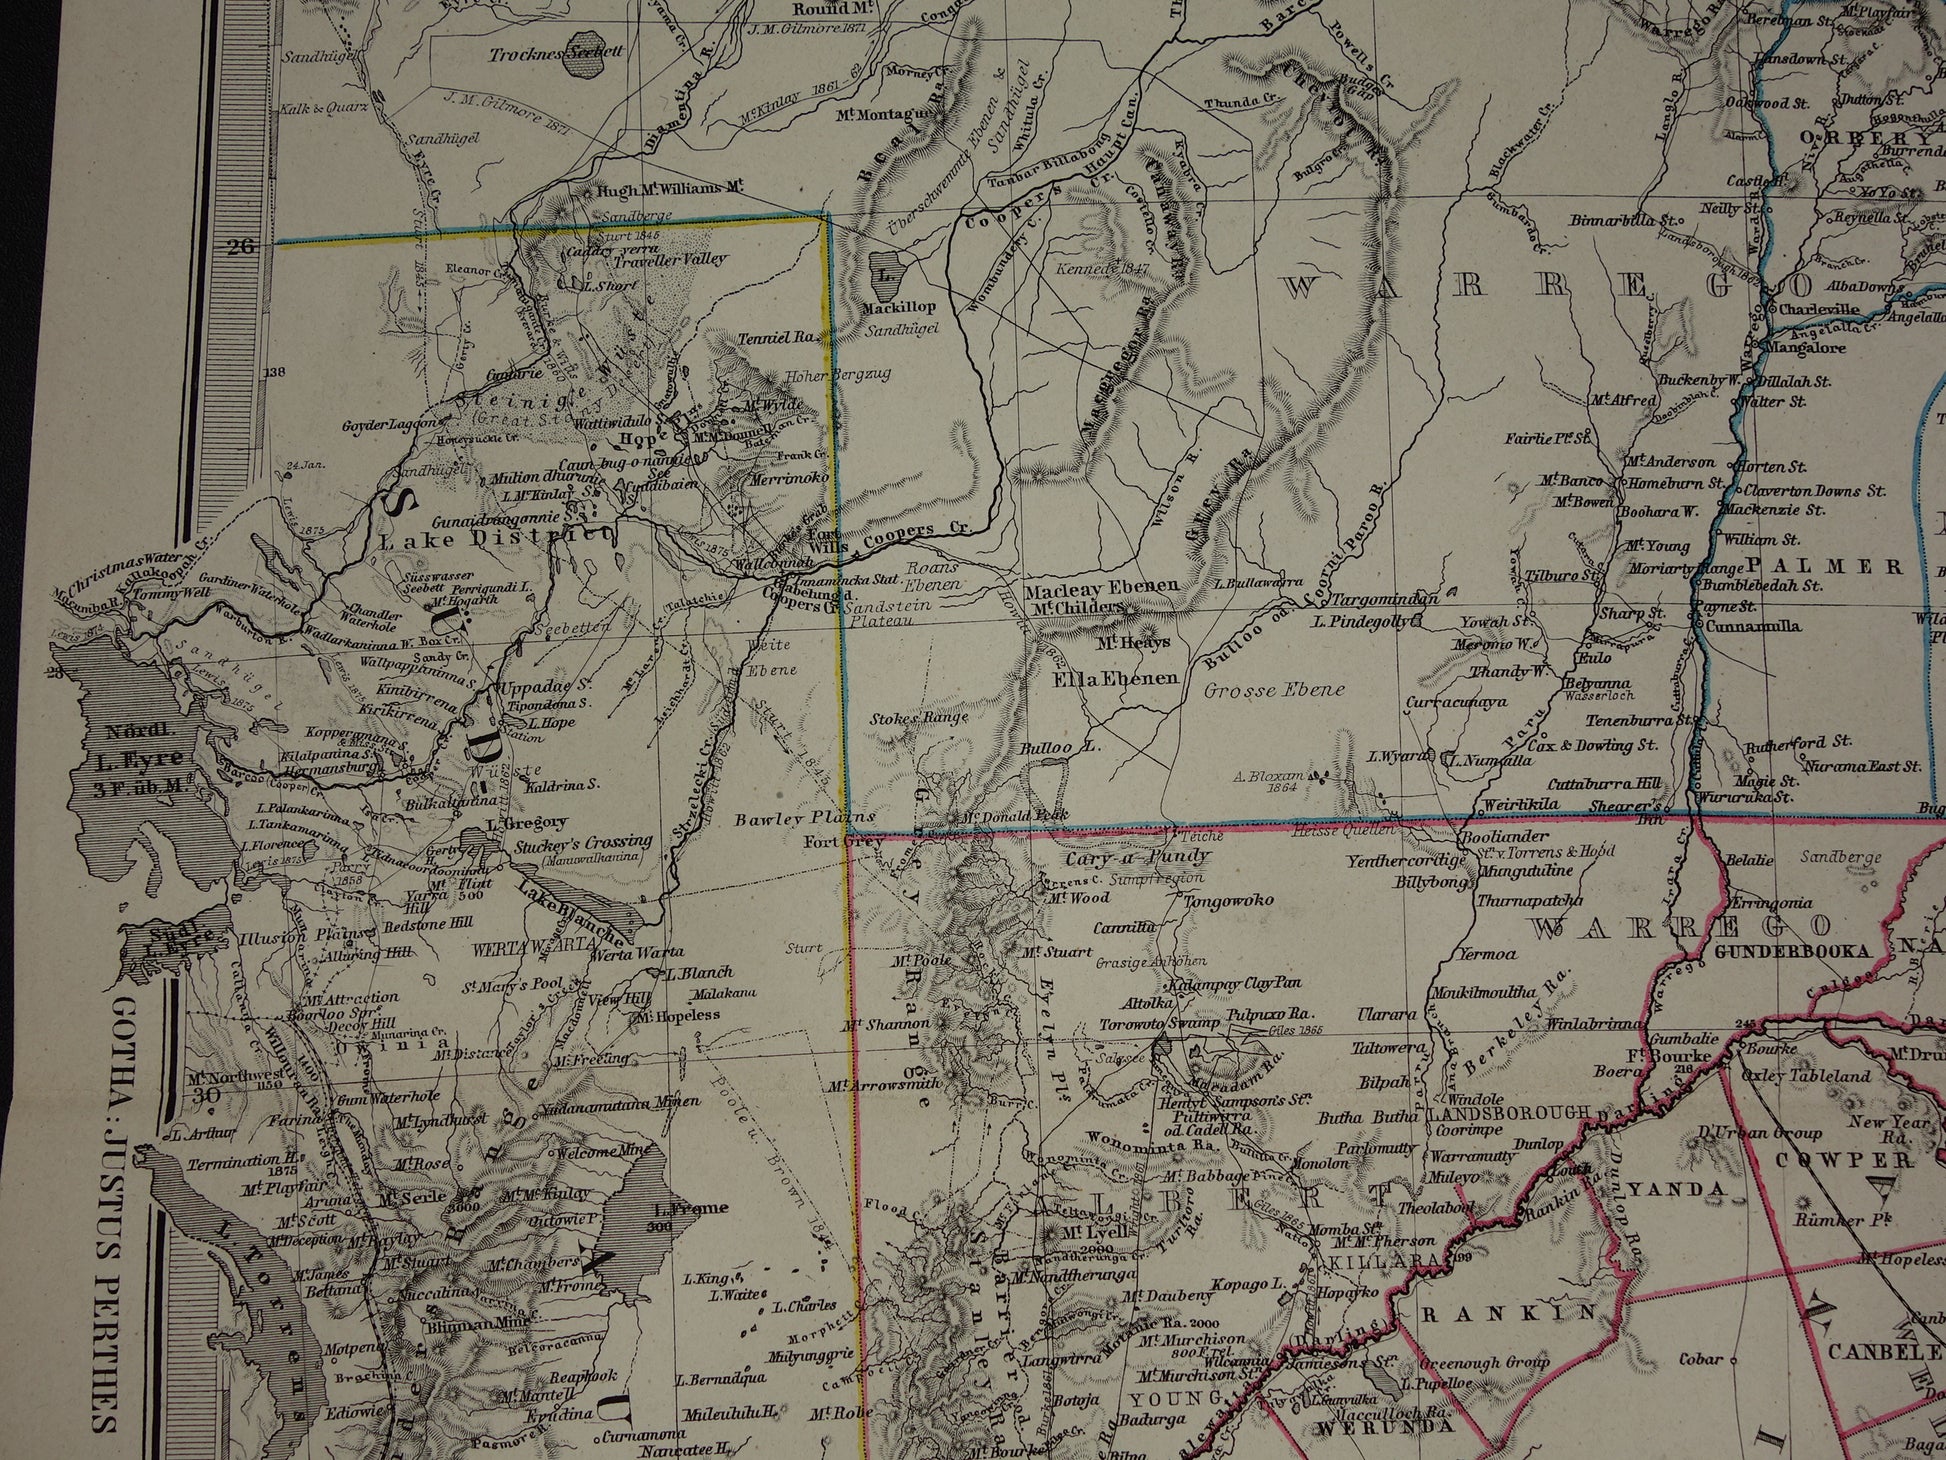 historische landkaart new south wales australie